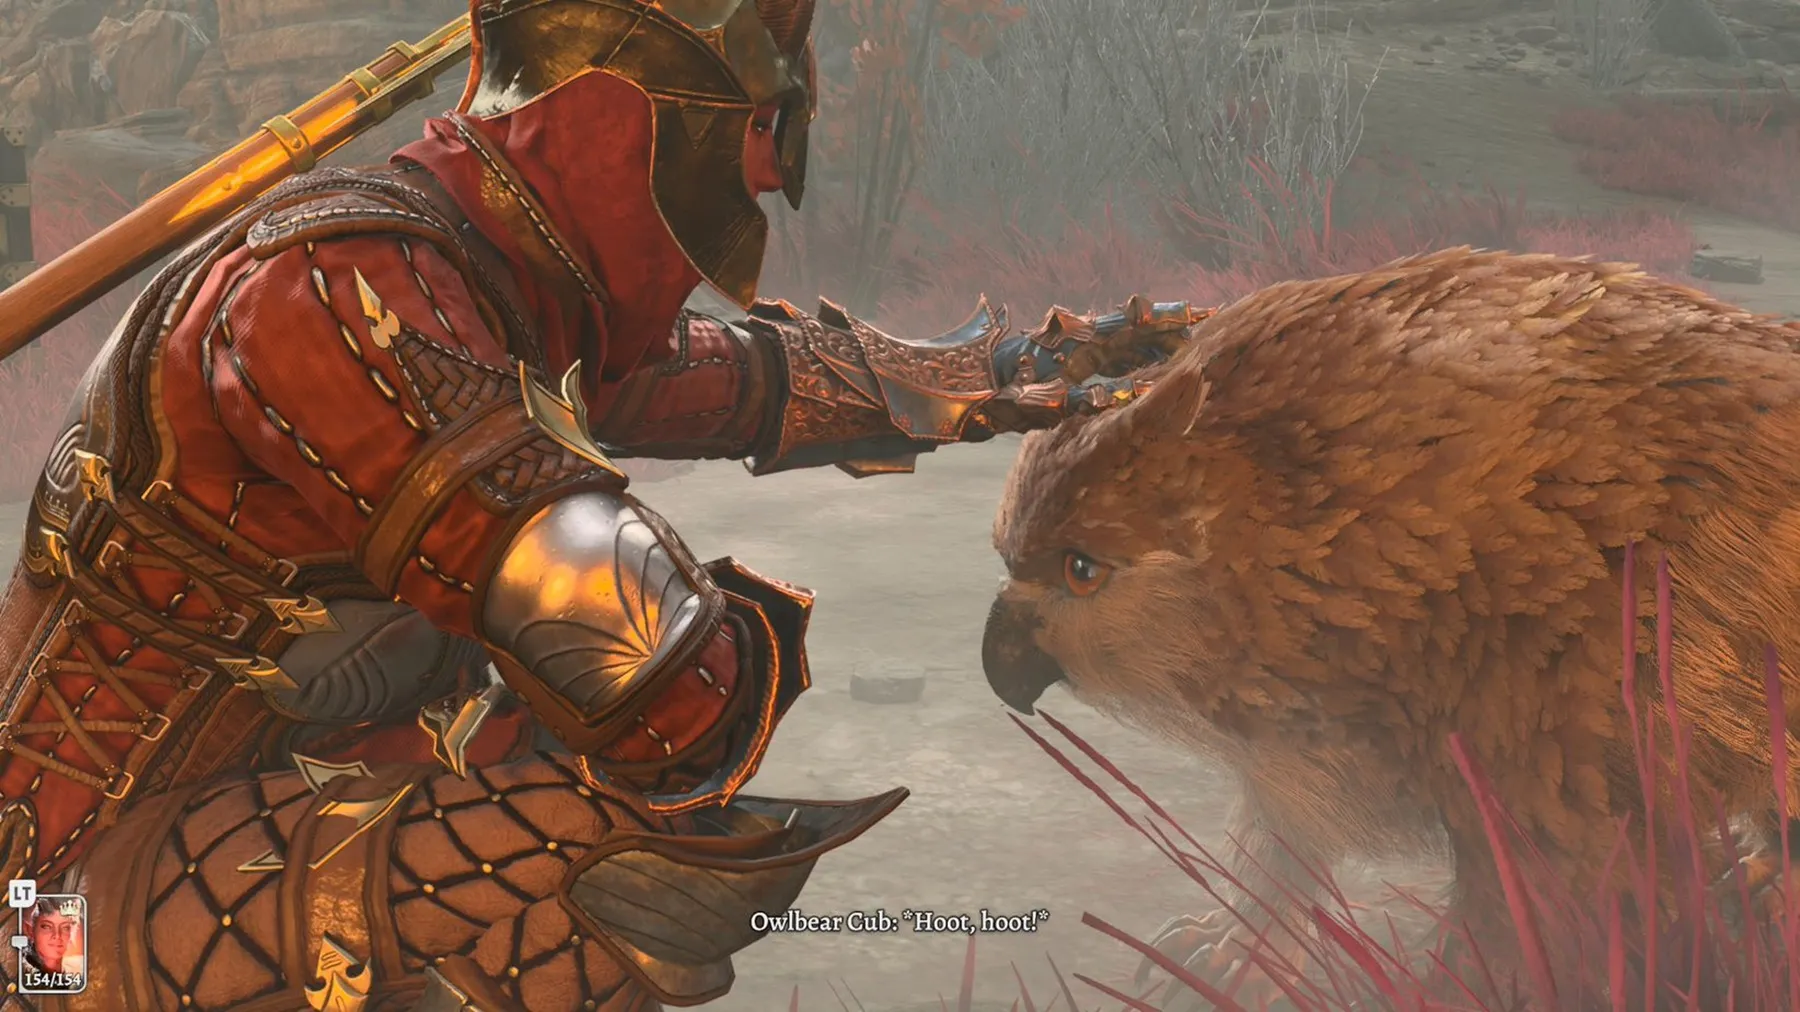 Karlach caressant un owlbear dans Baldur's Gate 3